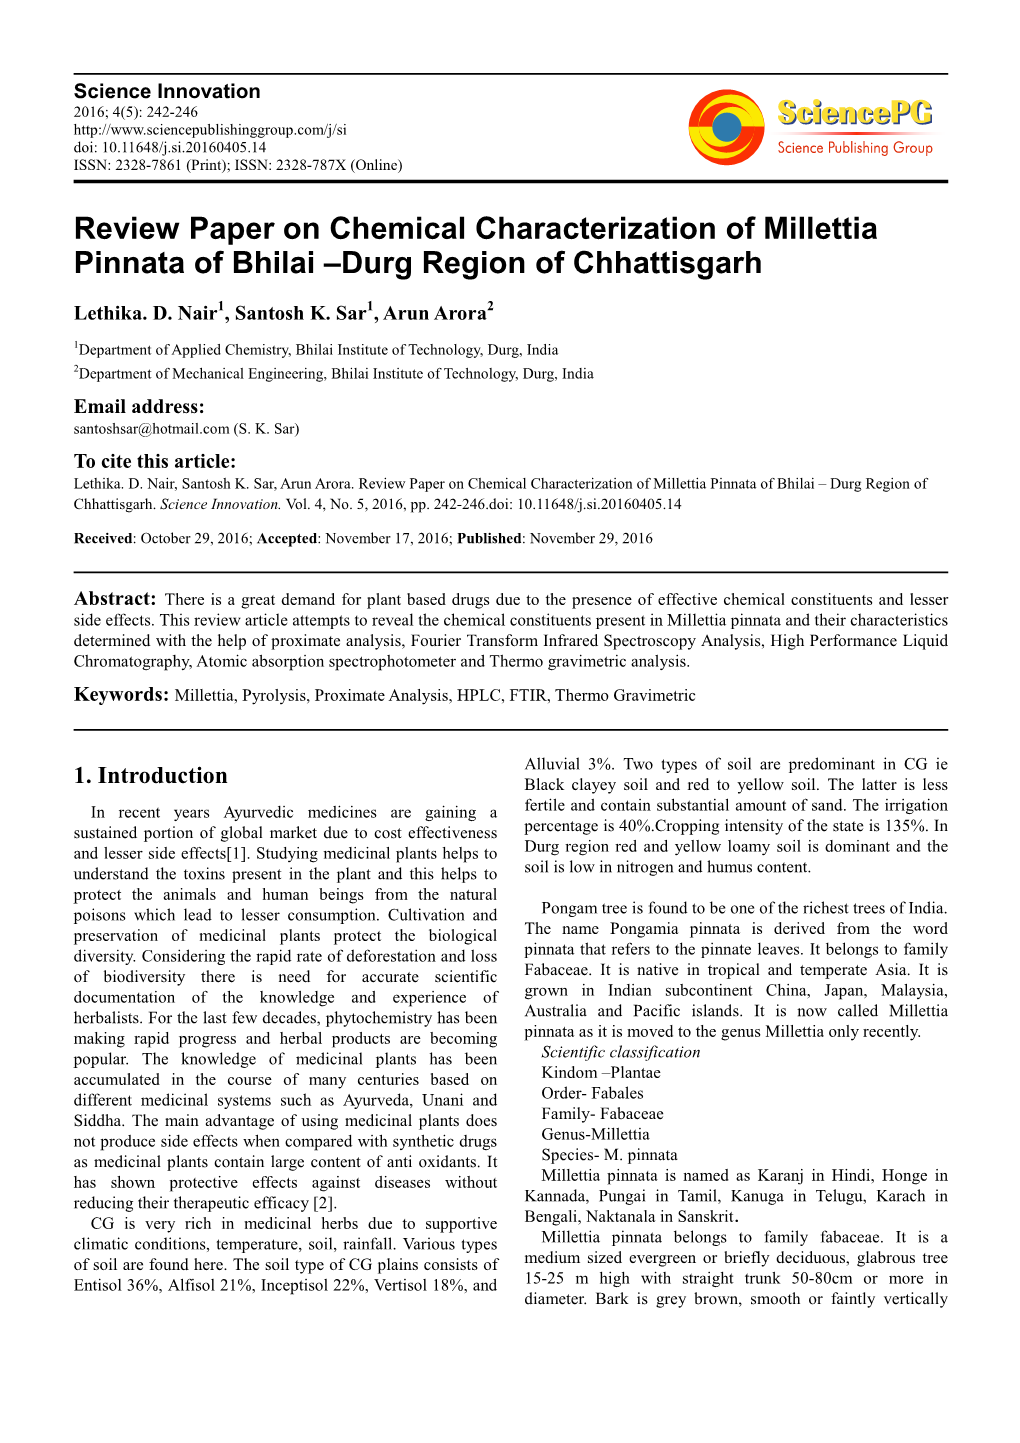 Review Paper on Chemical Characterization of Millettia Pinnata of Bhilai –Durg Region of Chhattisgarh